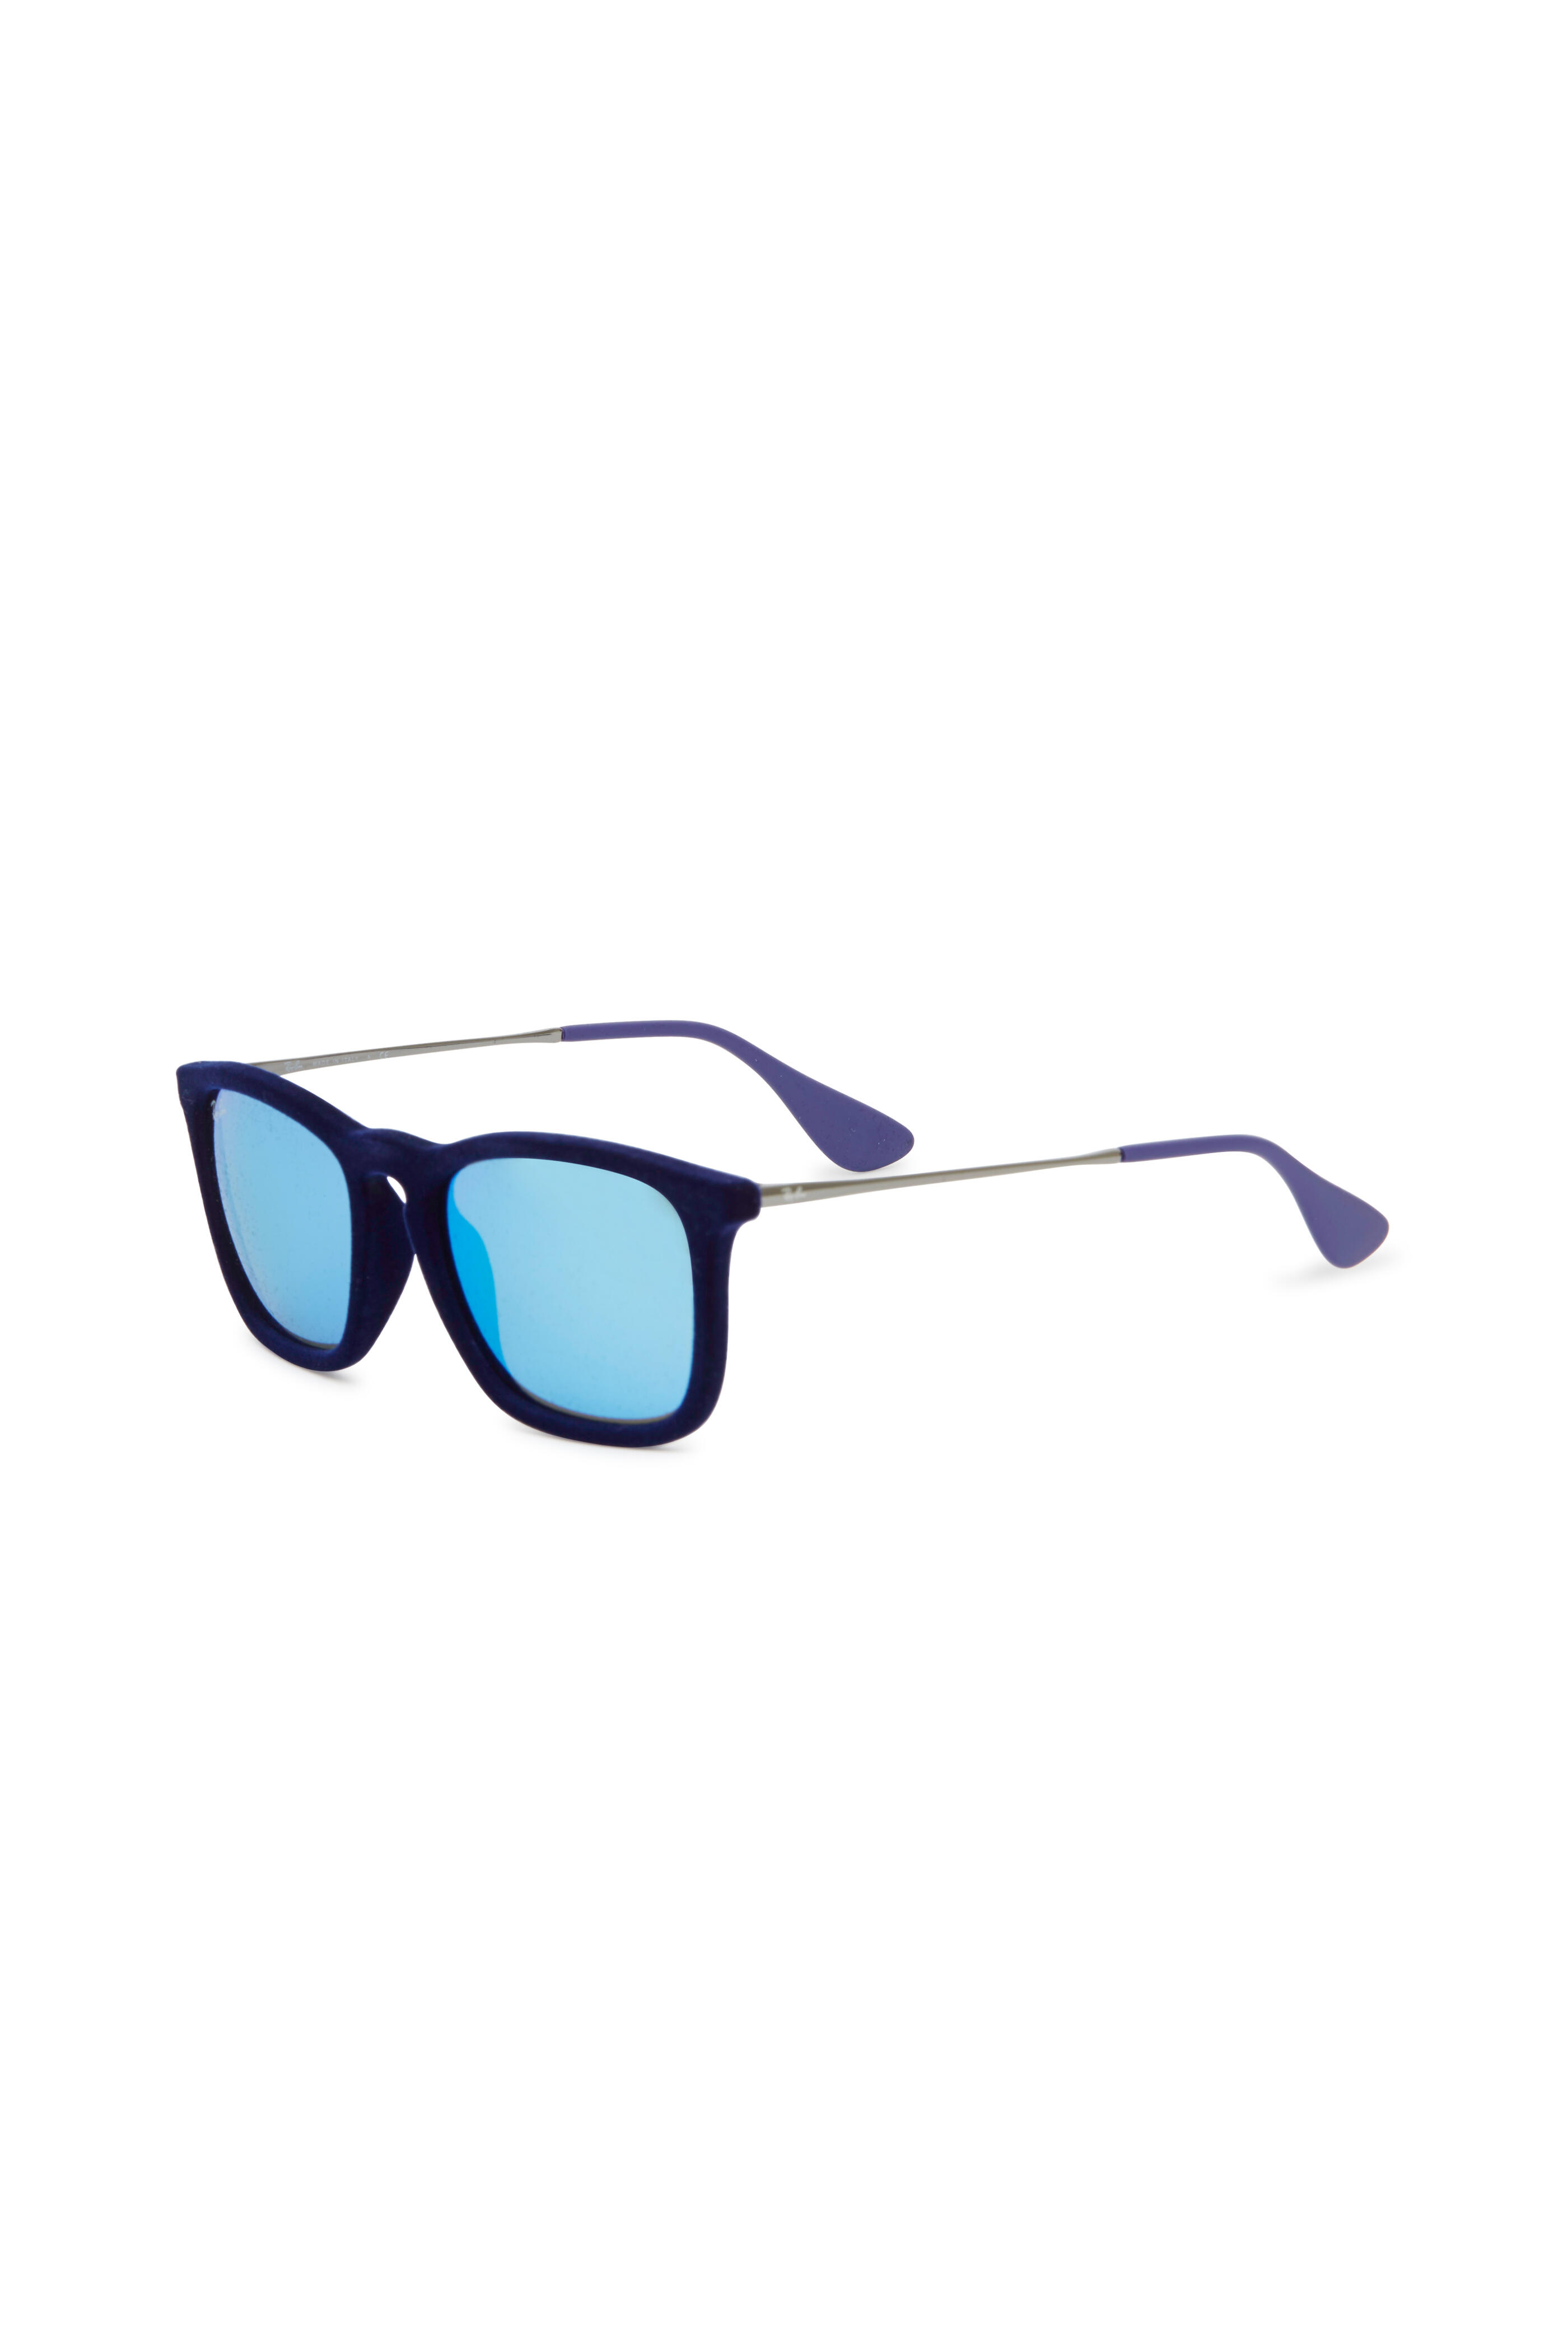 Ray Ban - Chris Velvet Blue Sunglasses | Mitchell Stores